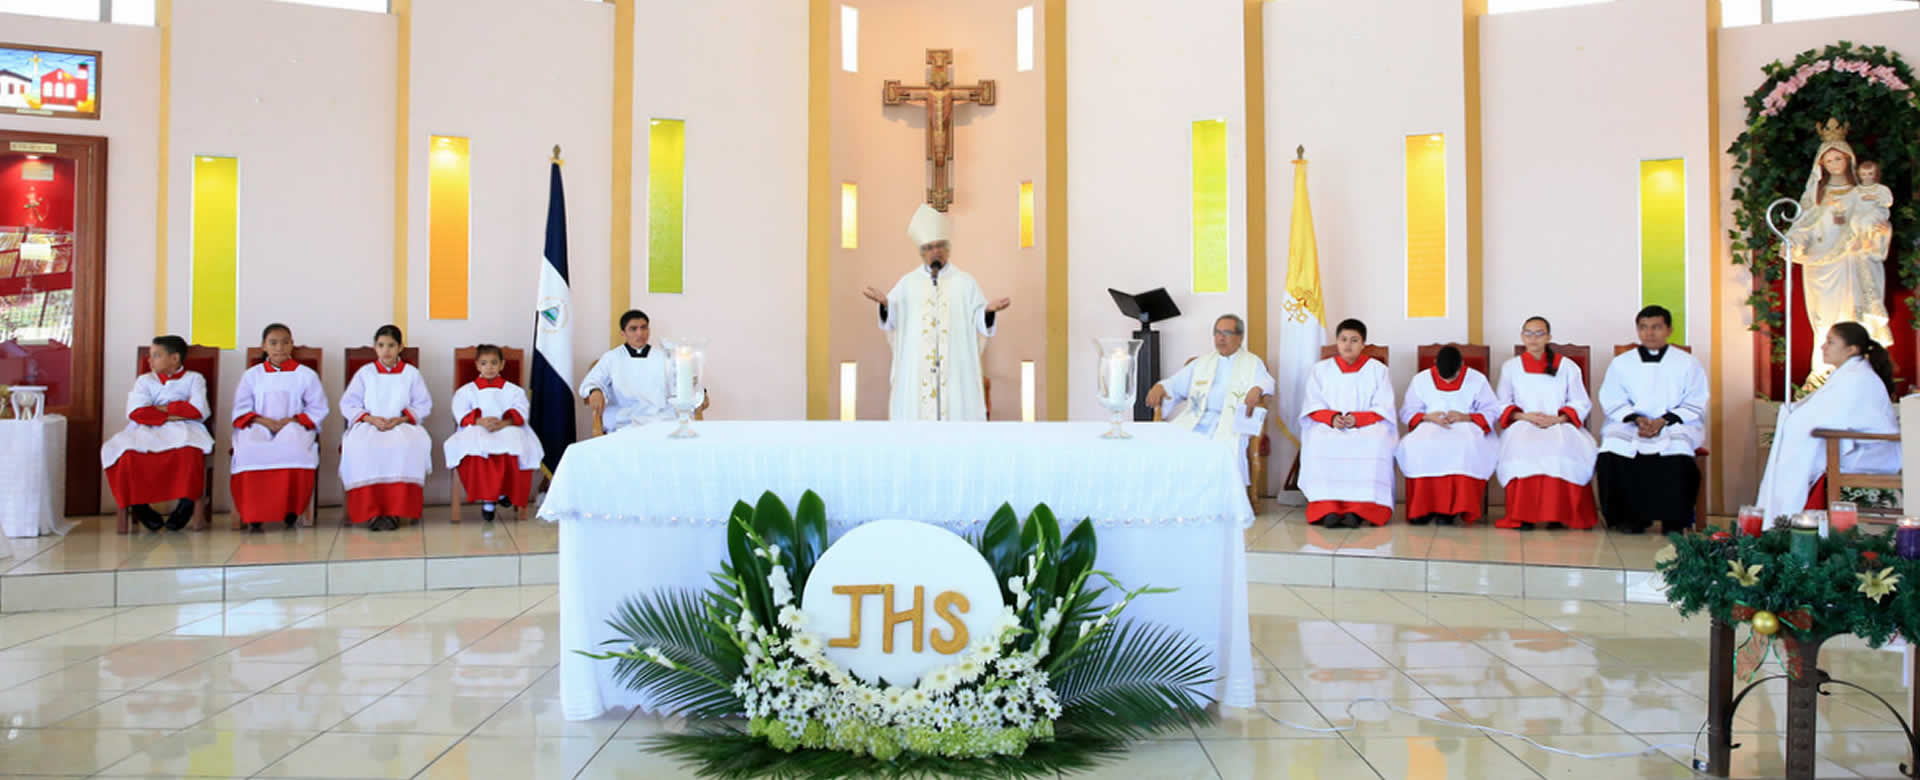 Cardenal Leopoldo Brenes celebra comuniones en la Parroquia La Merced